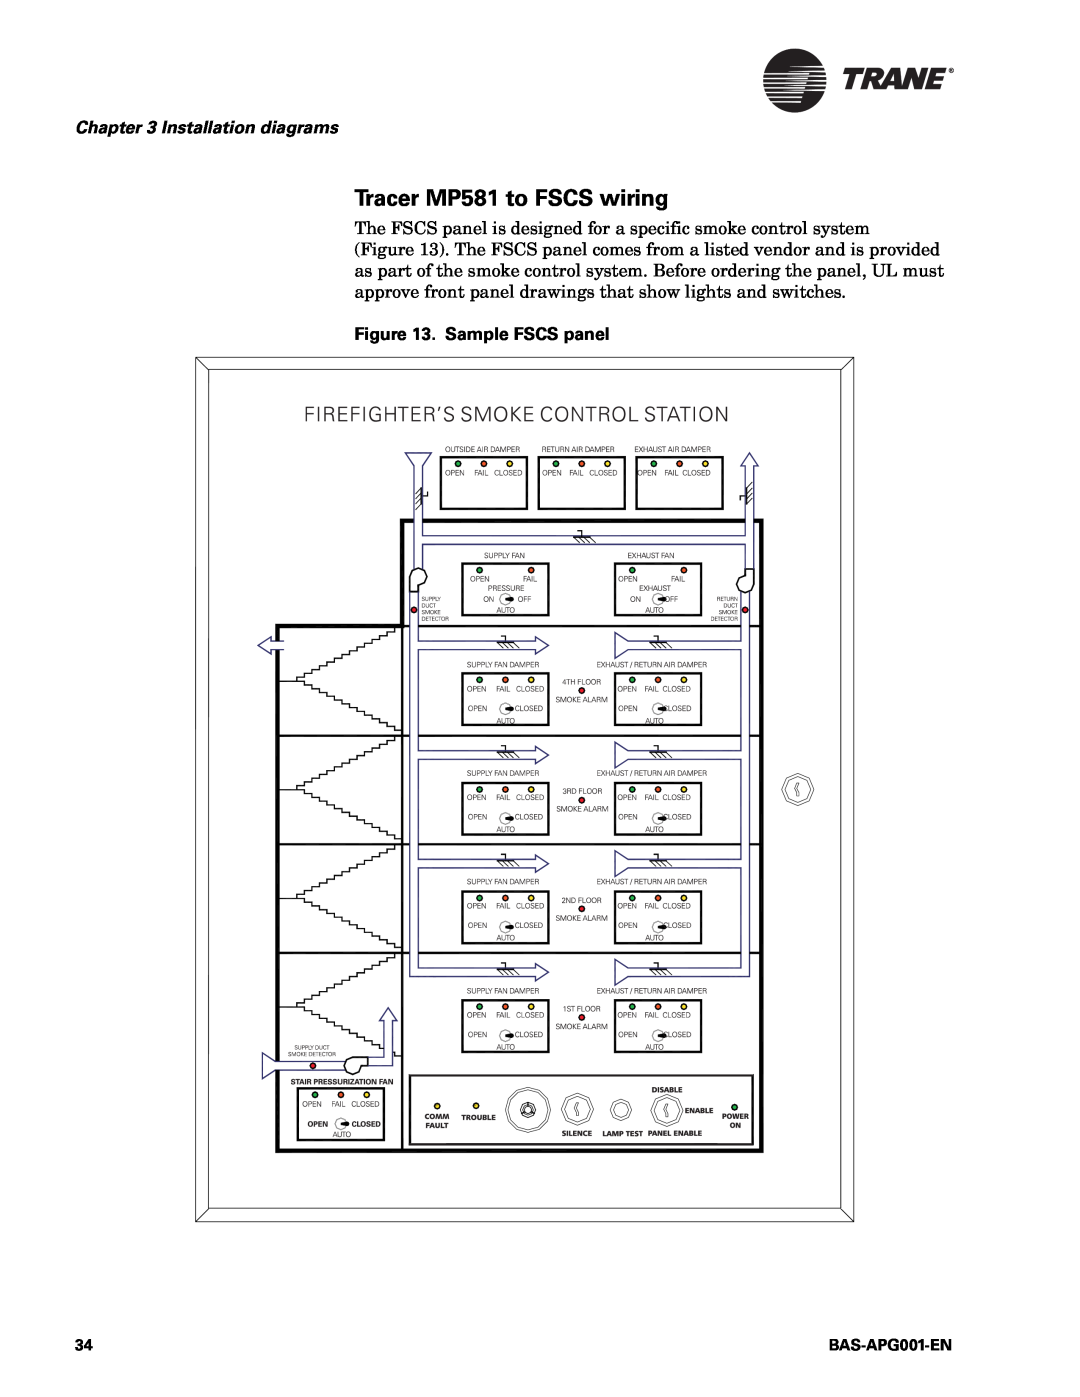 Trane BAS-APG001-EN manual Tracer MP581 to FSCS wiring, Installation diagrams, Sample FSCS panel 